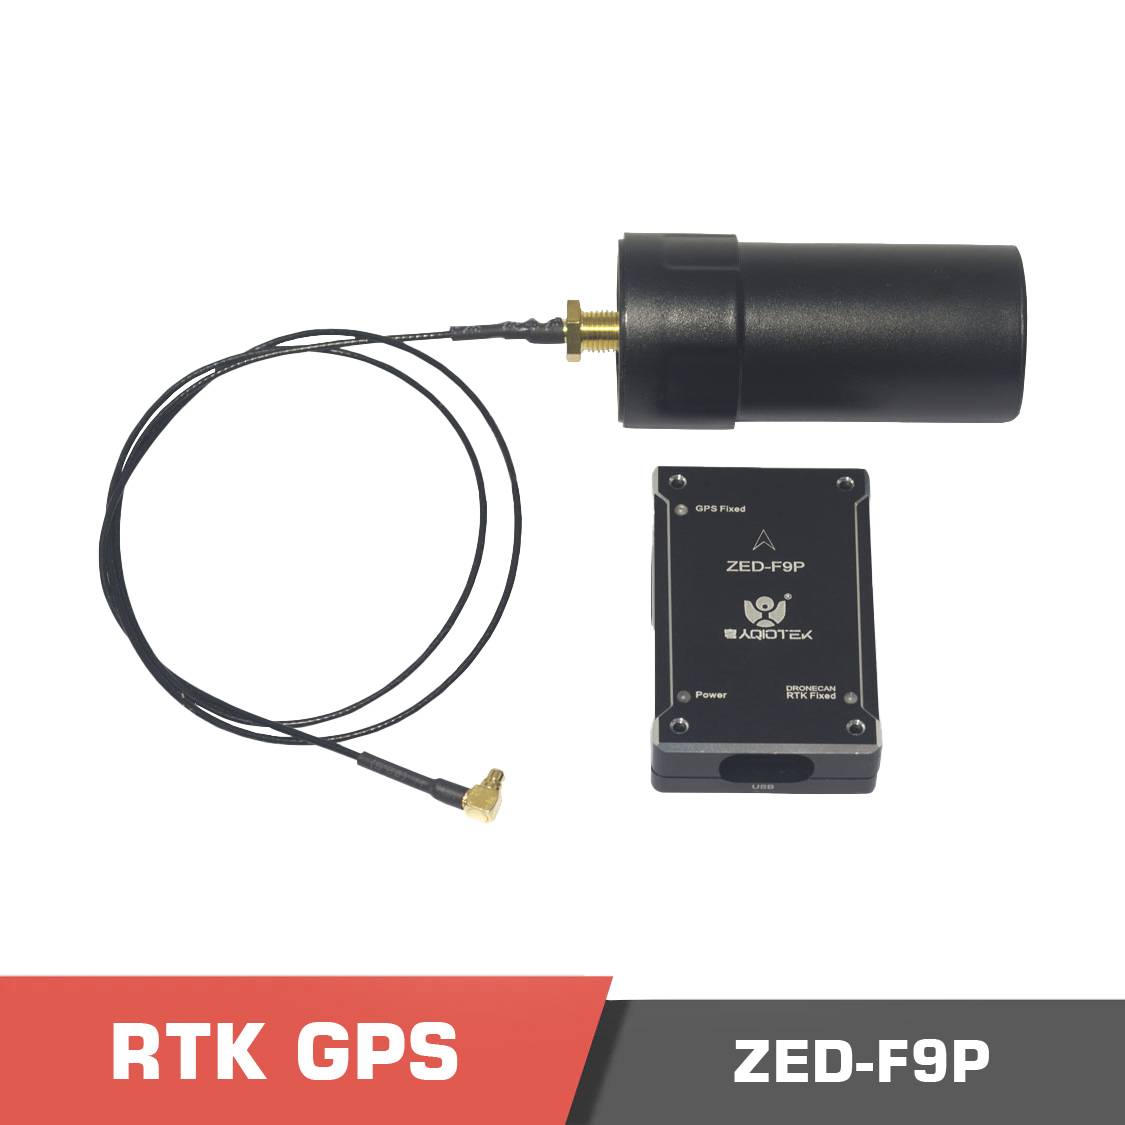 zed1 - H-RTK Unicore UM982 ,H-RTK Unicore UM982 (Dual Antenna),Unicore UM982,Dual Antenna RTK,RTK 2HP,RTK,GPS,compass,H-RTK,GNSS,Beidou,Glonass,Galileo,dual gps yaw,pixhawk gps,RTK GNSS,GPS RTK GNSS - MotioNew - 2